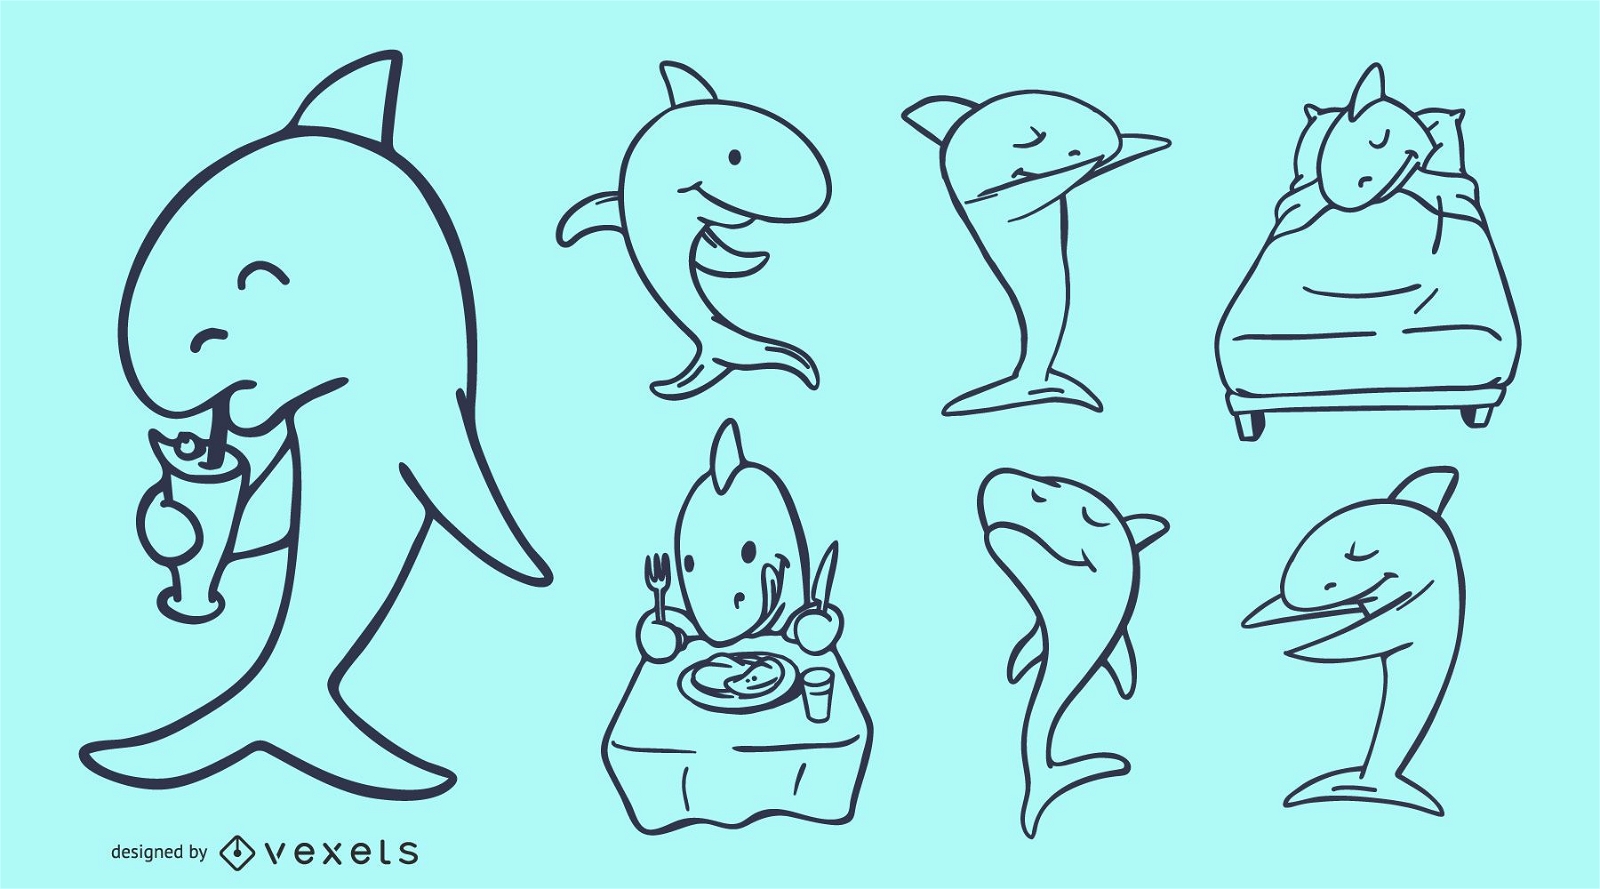 Descarga Vector De Garabatos De Dibujos Animados De Tiburones